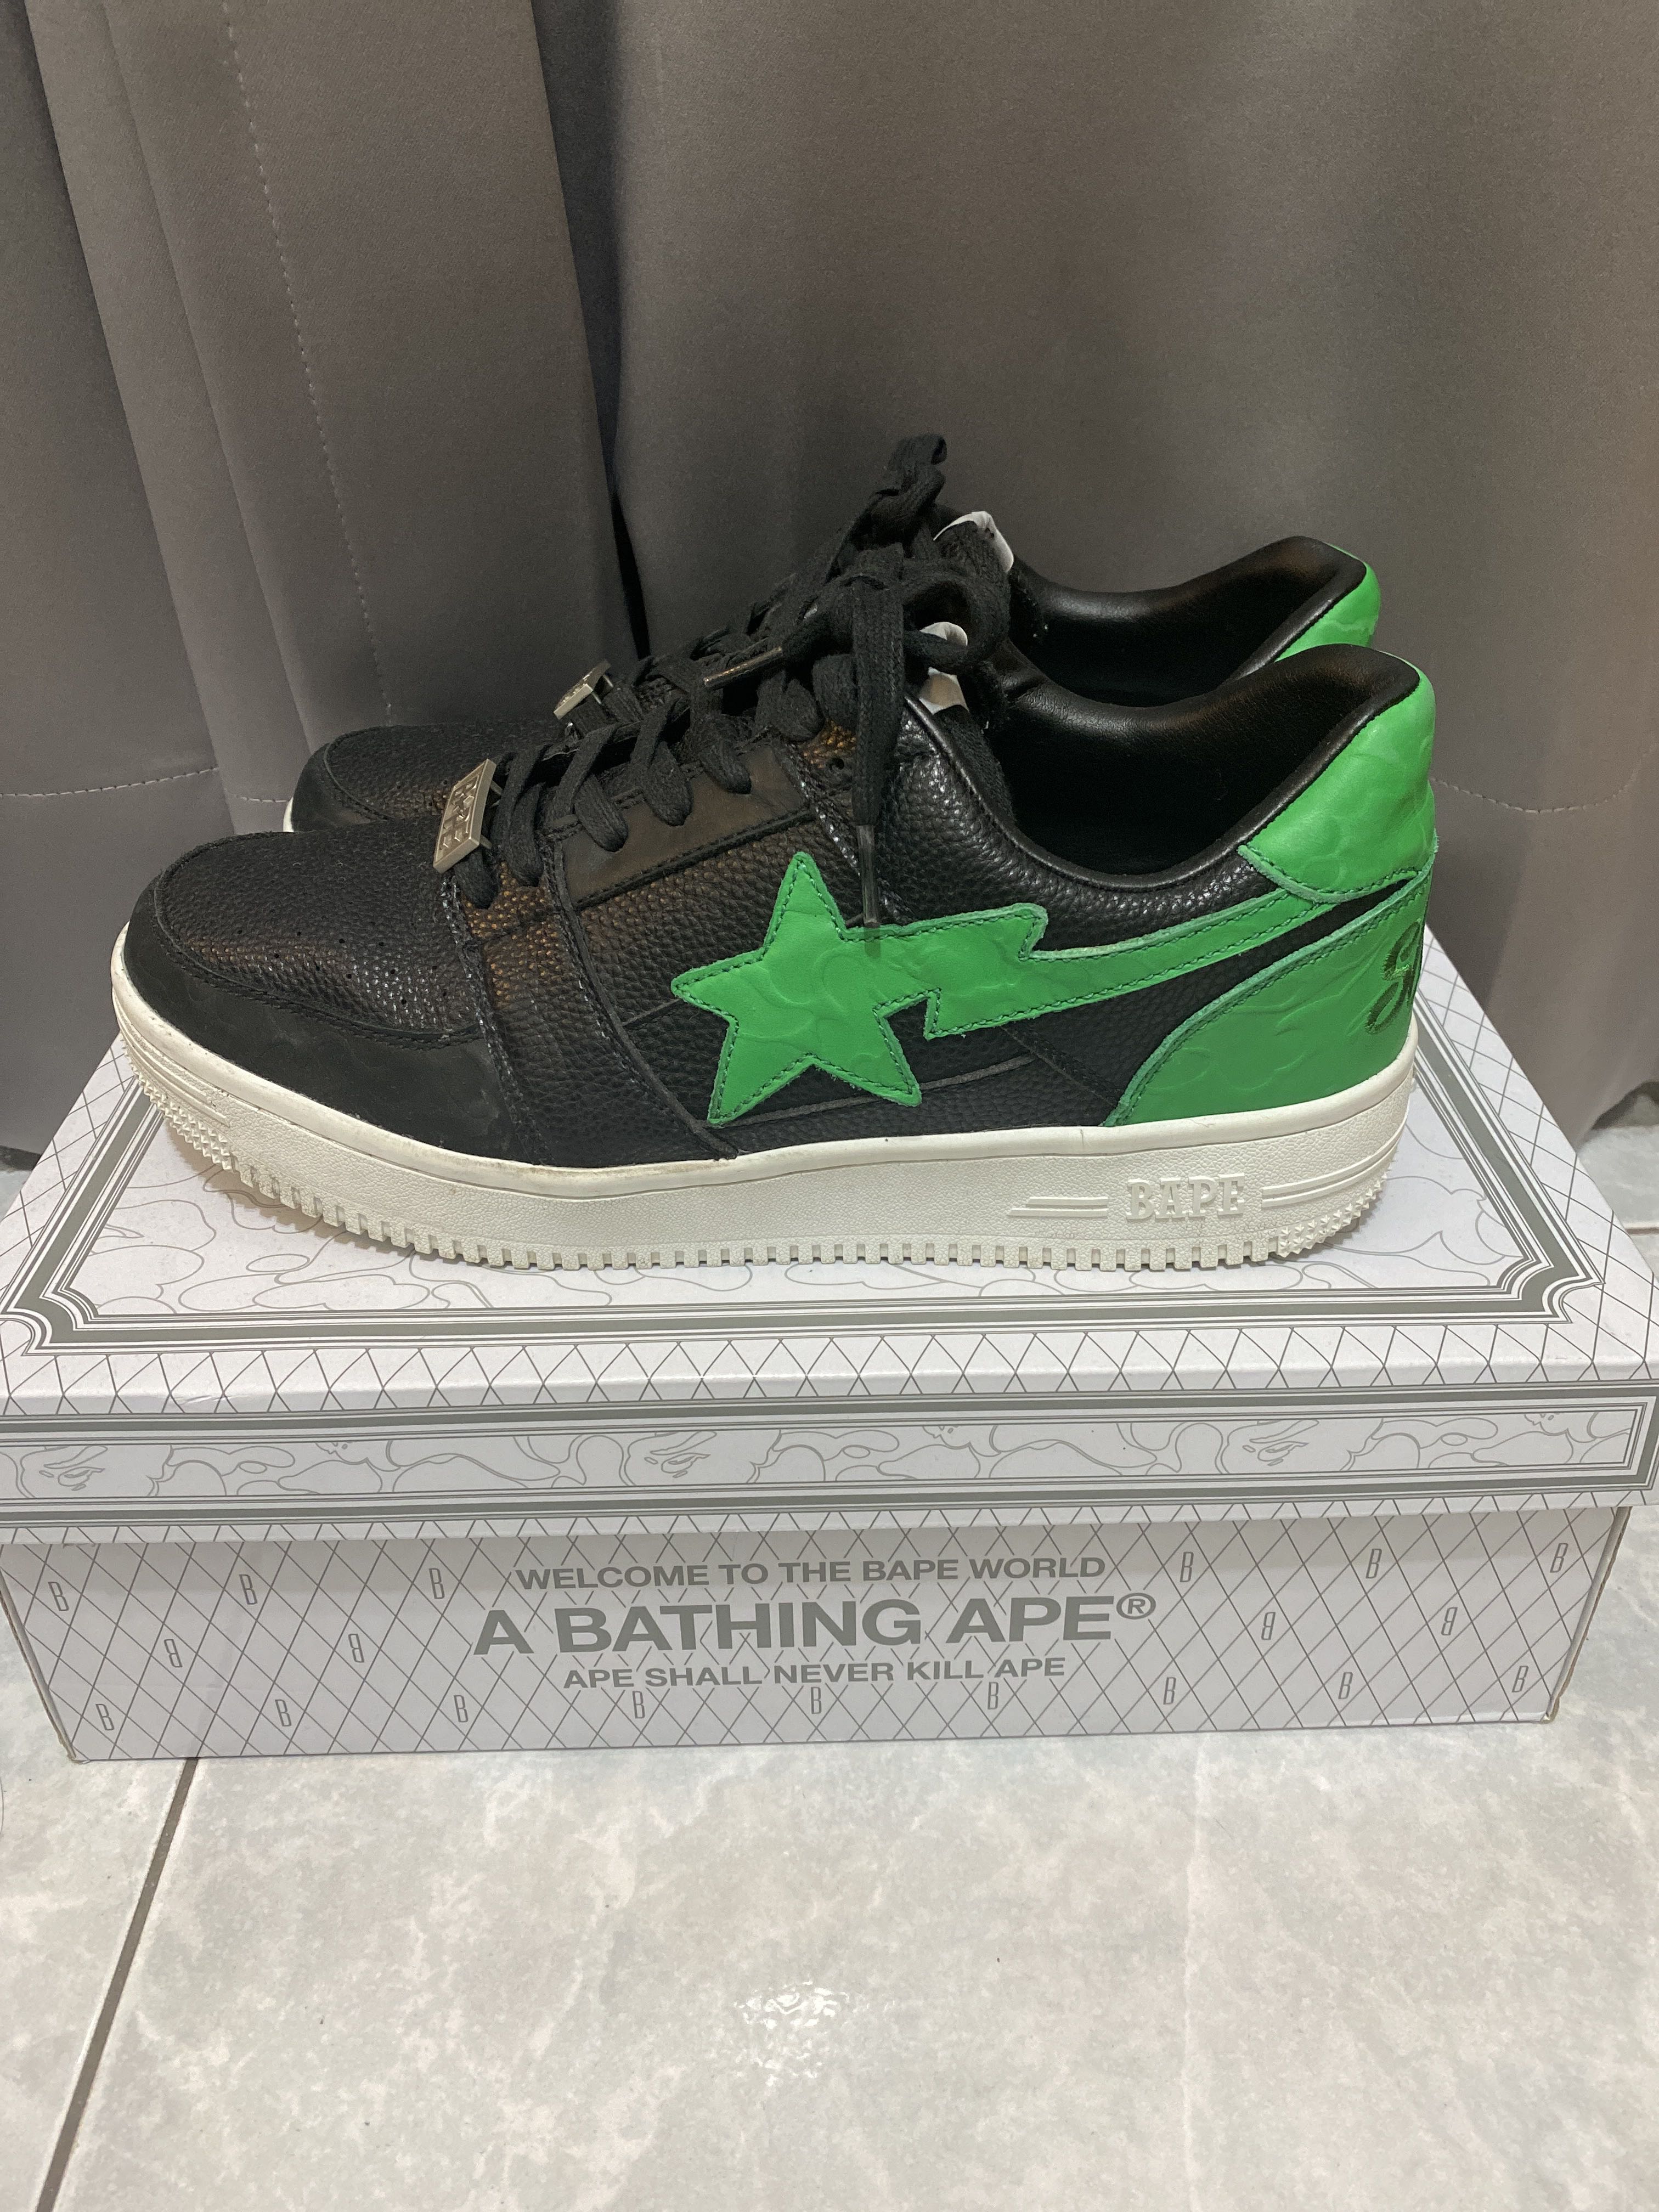 Bapesta x美國著名饒舌歌手Gunna, 他的時尚, 鞋, 運動鞋在旋轉拍賣